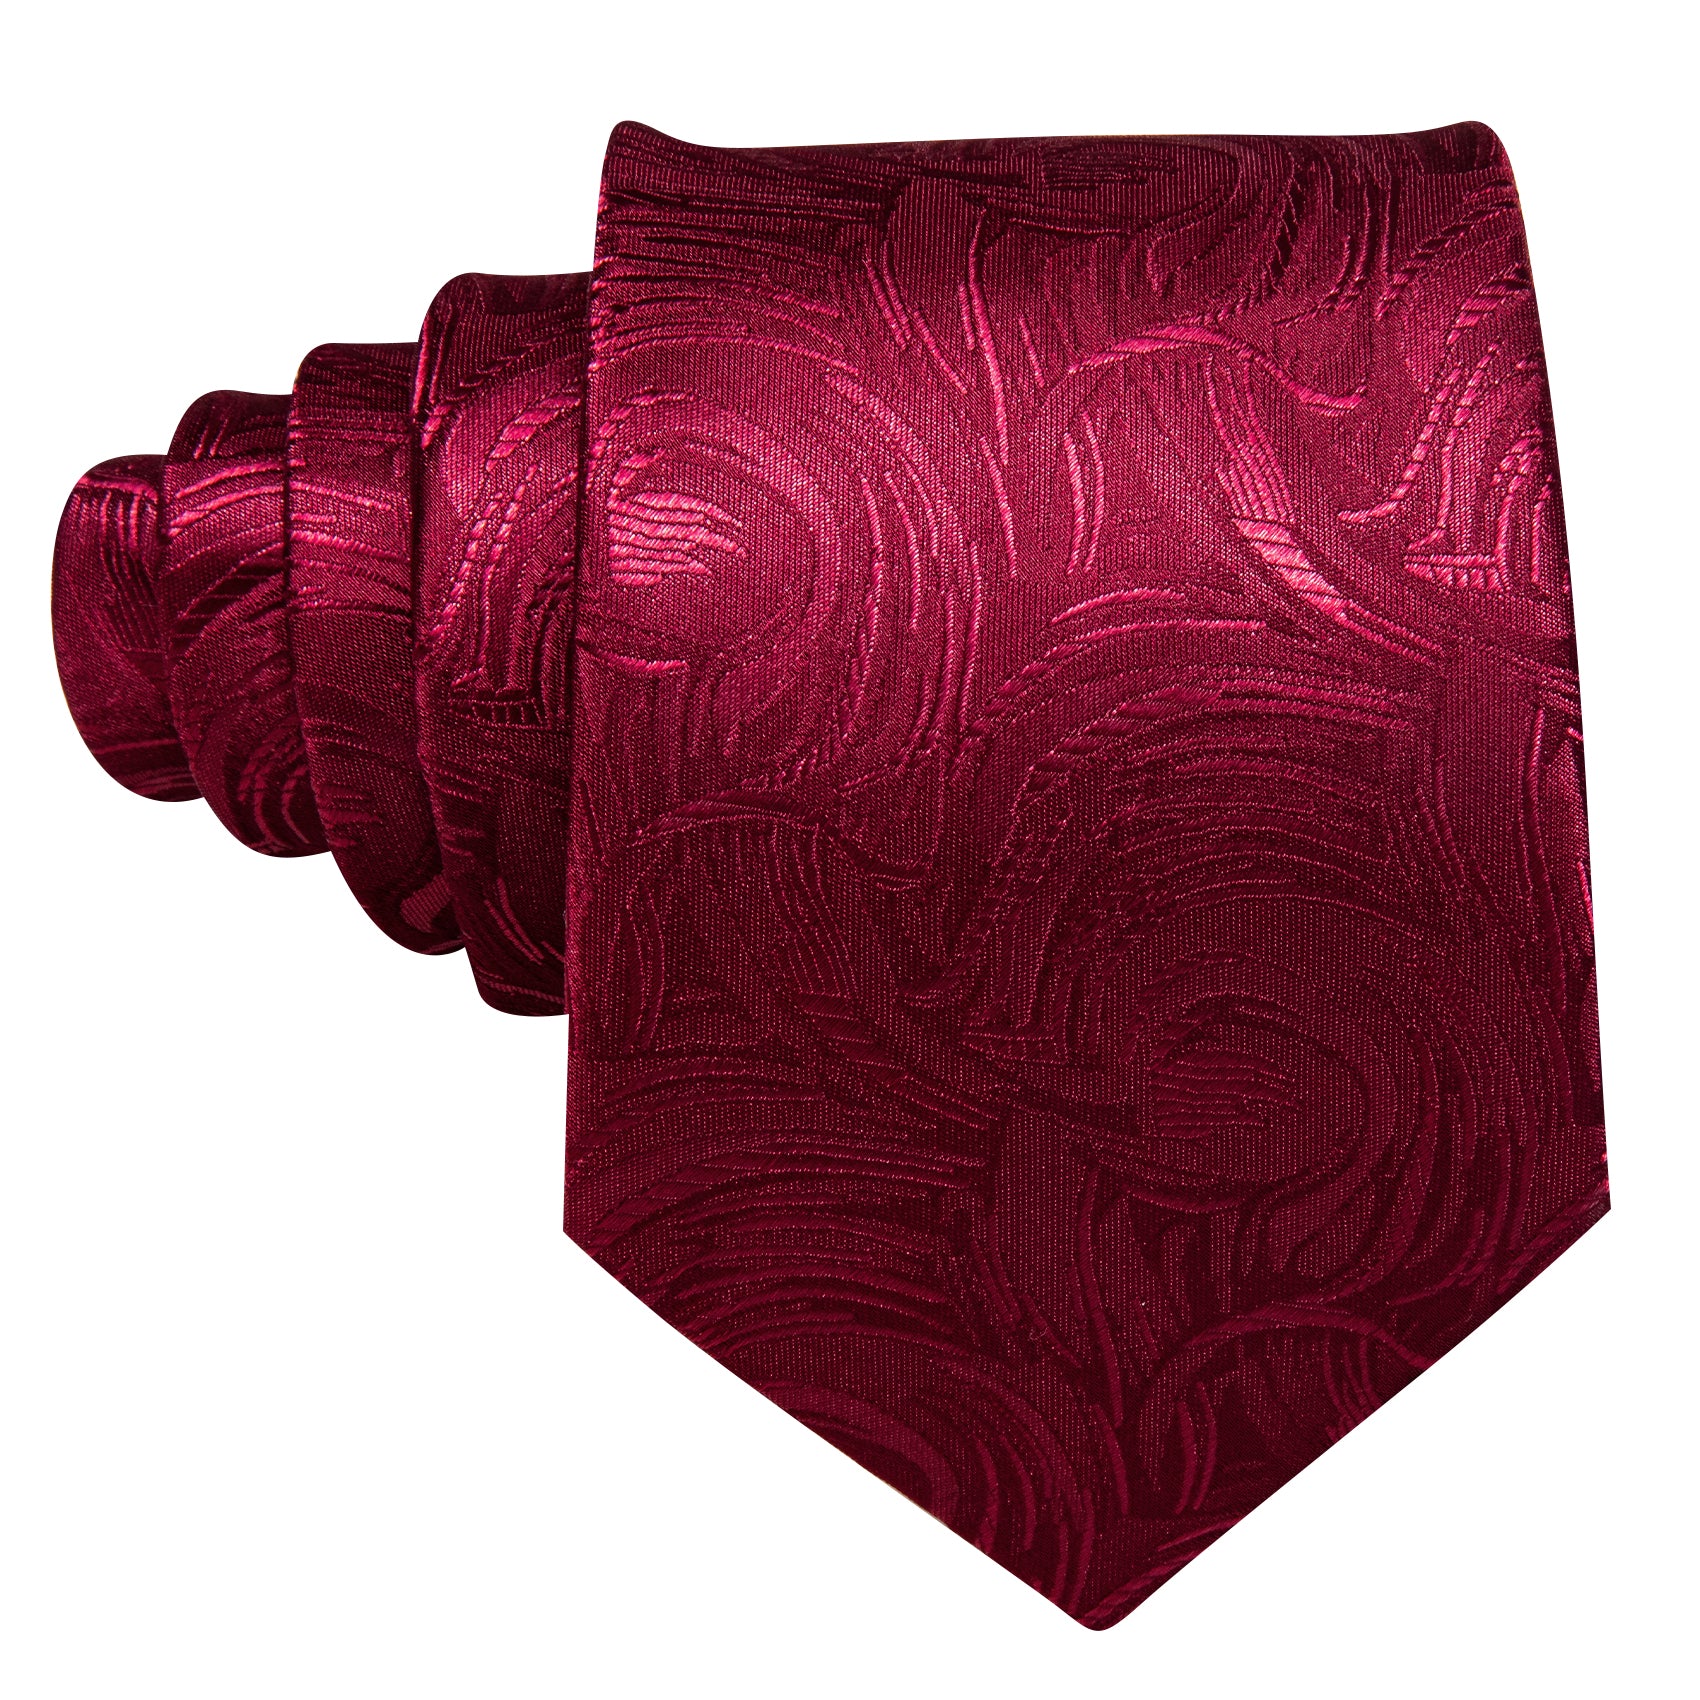 Fire Brick Paisley Silk Tie Handkerchief Cufflinks Set